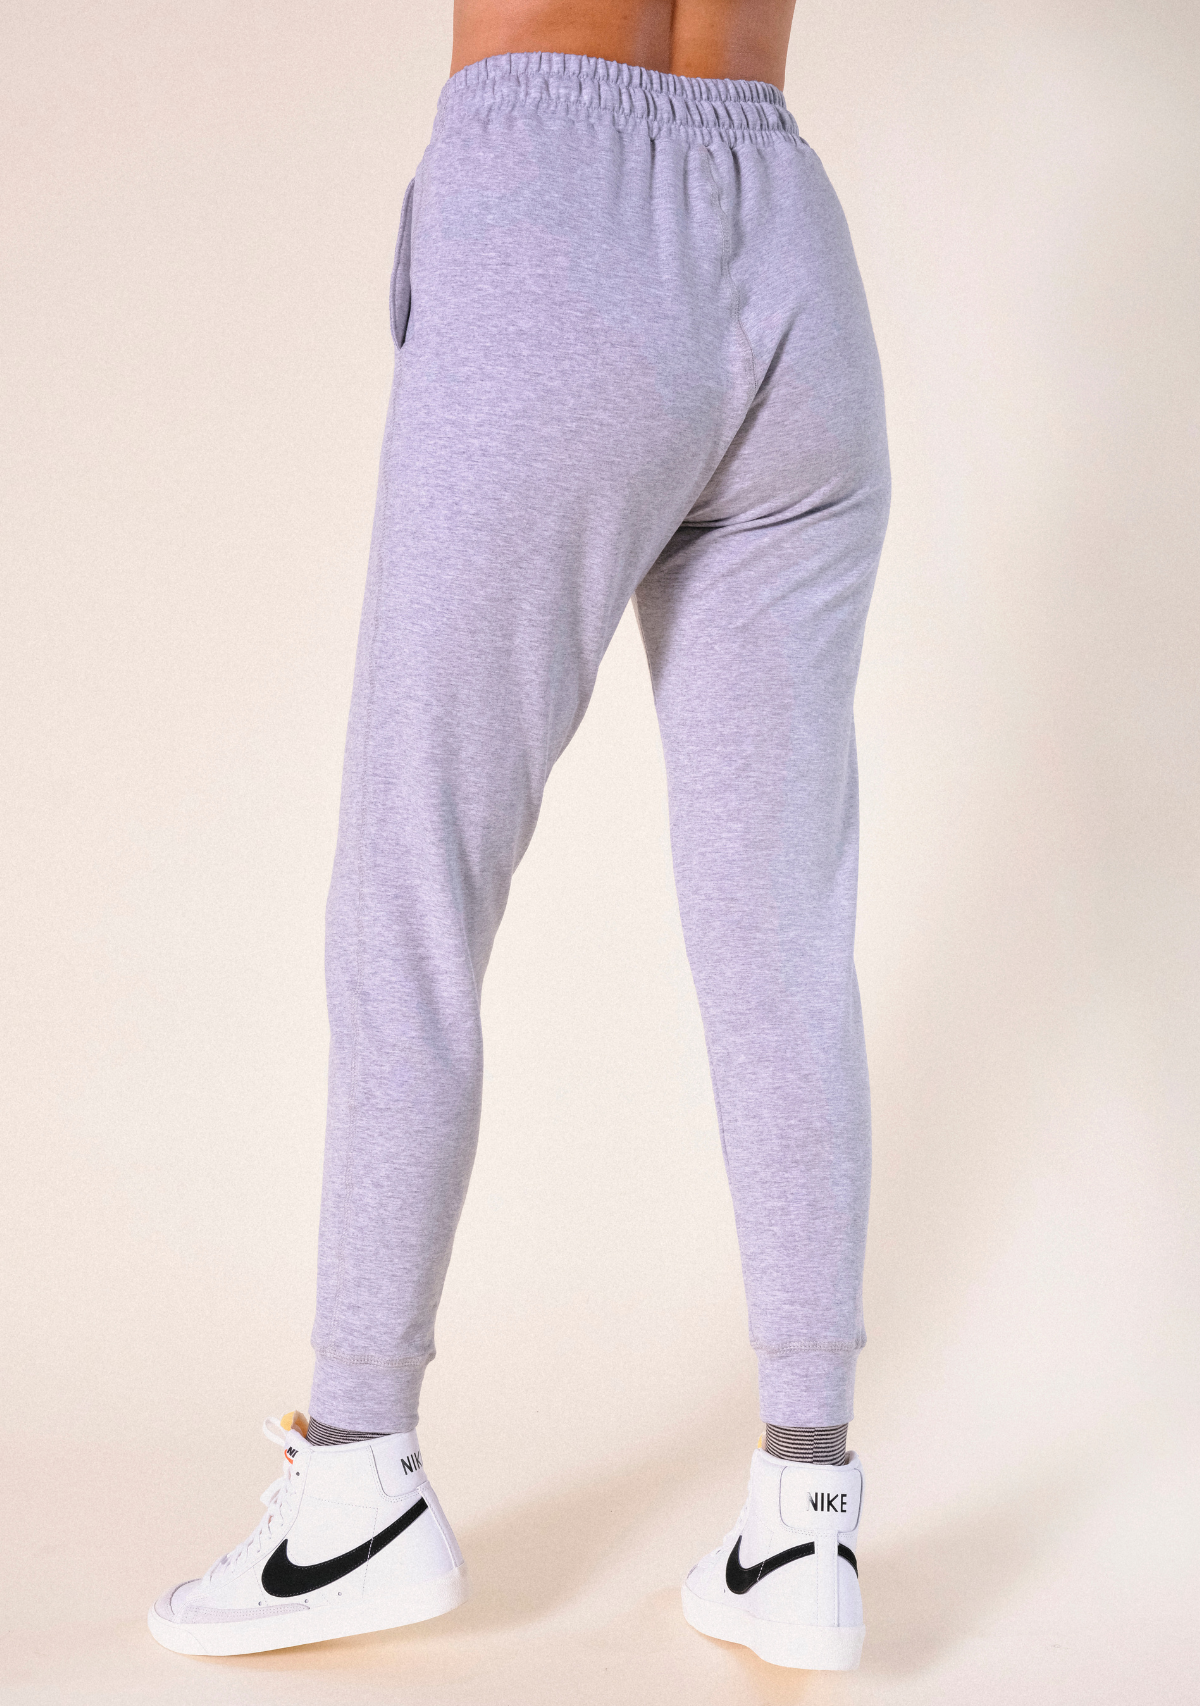 Women's Organic Cotton + Tencel™ Jogger Pant - Heather Gray XS-3X